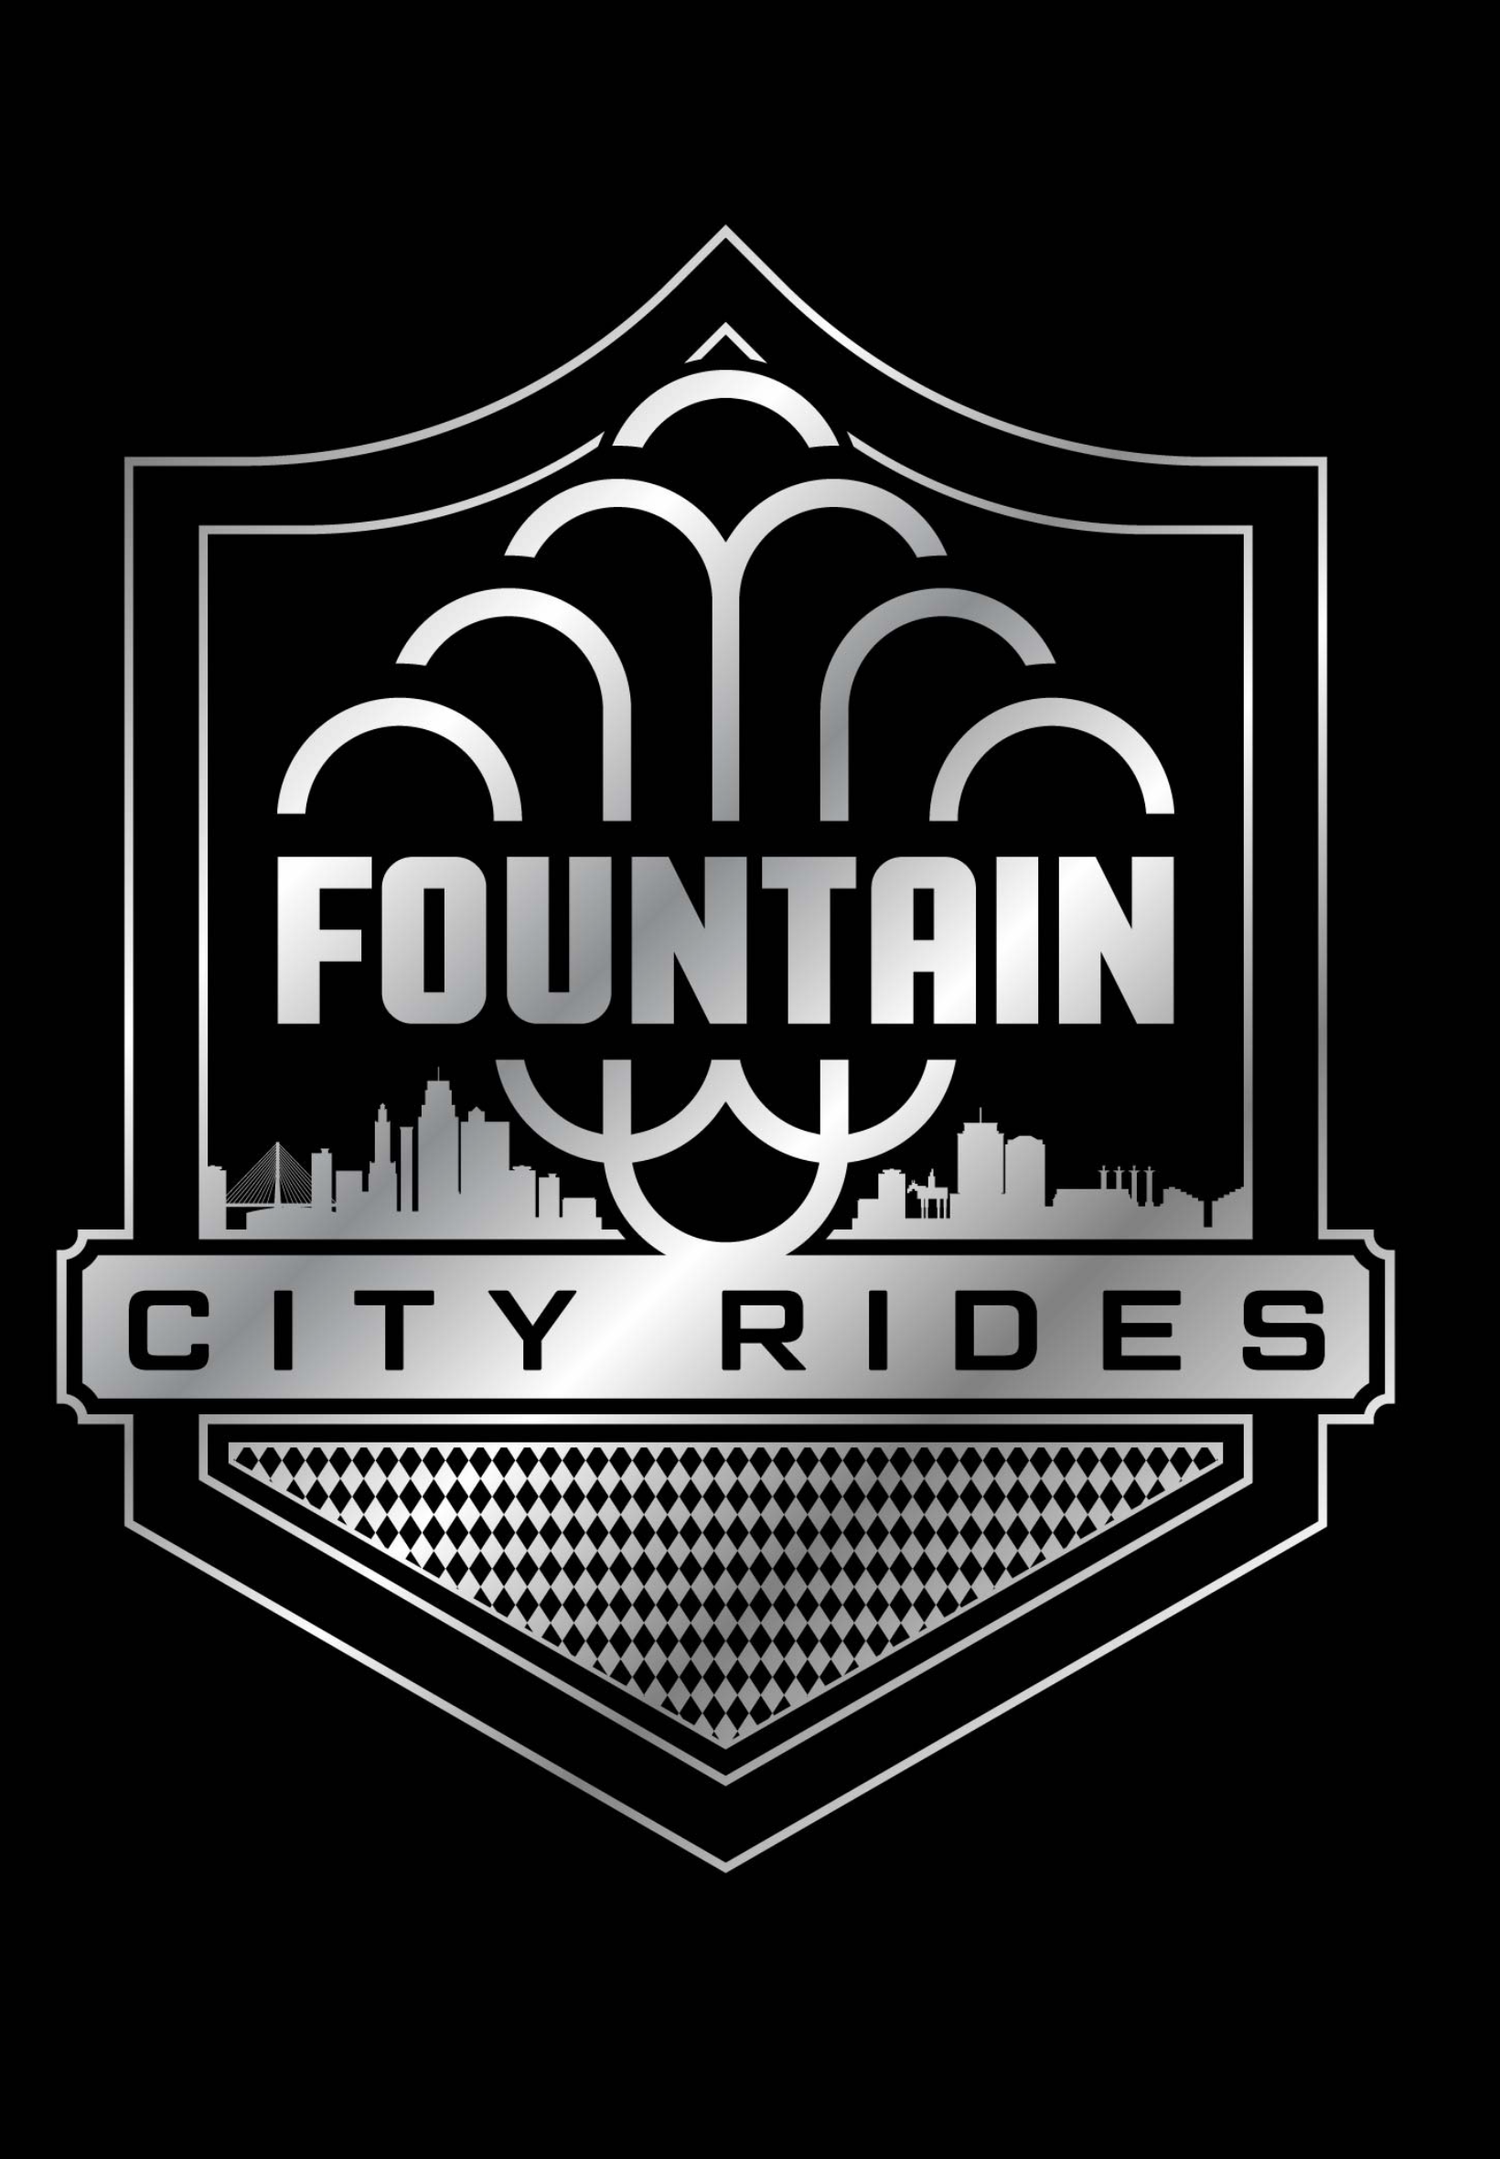 Fountain City Rides